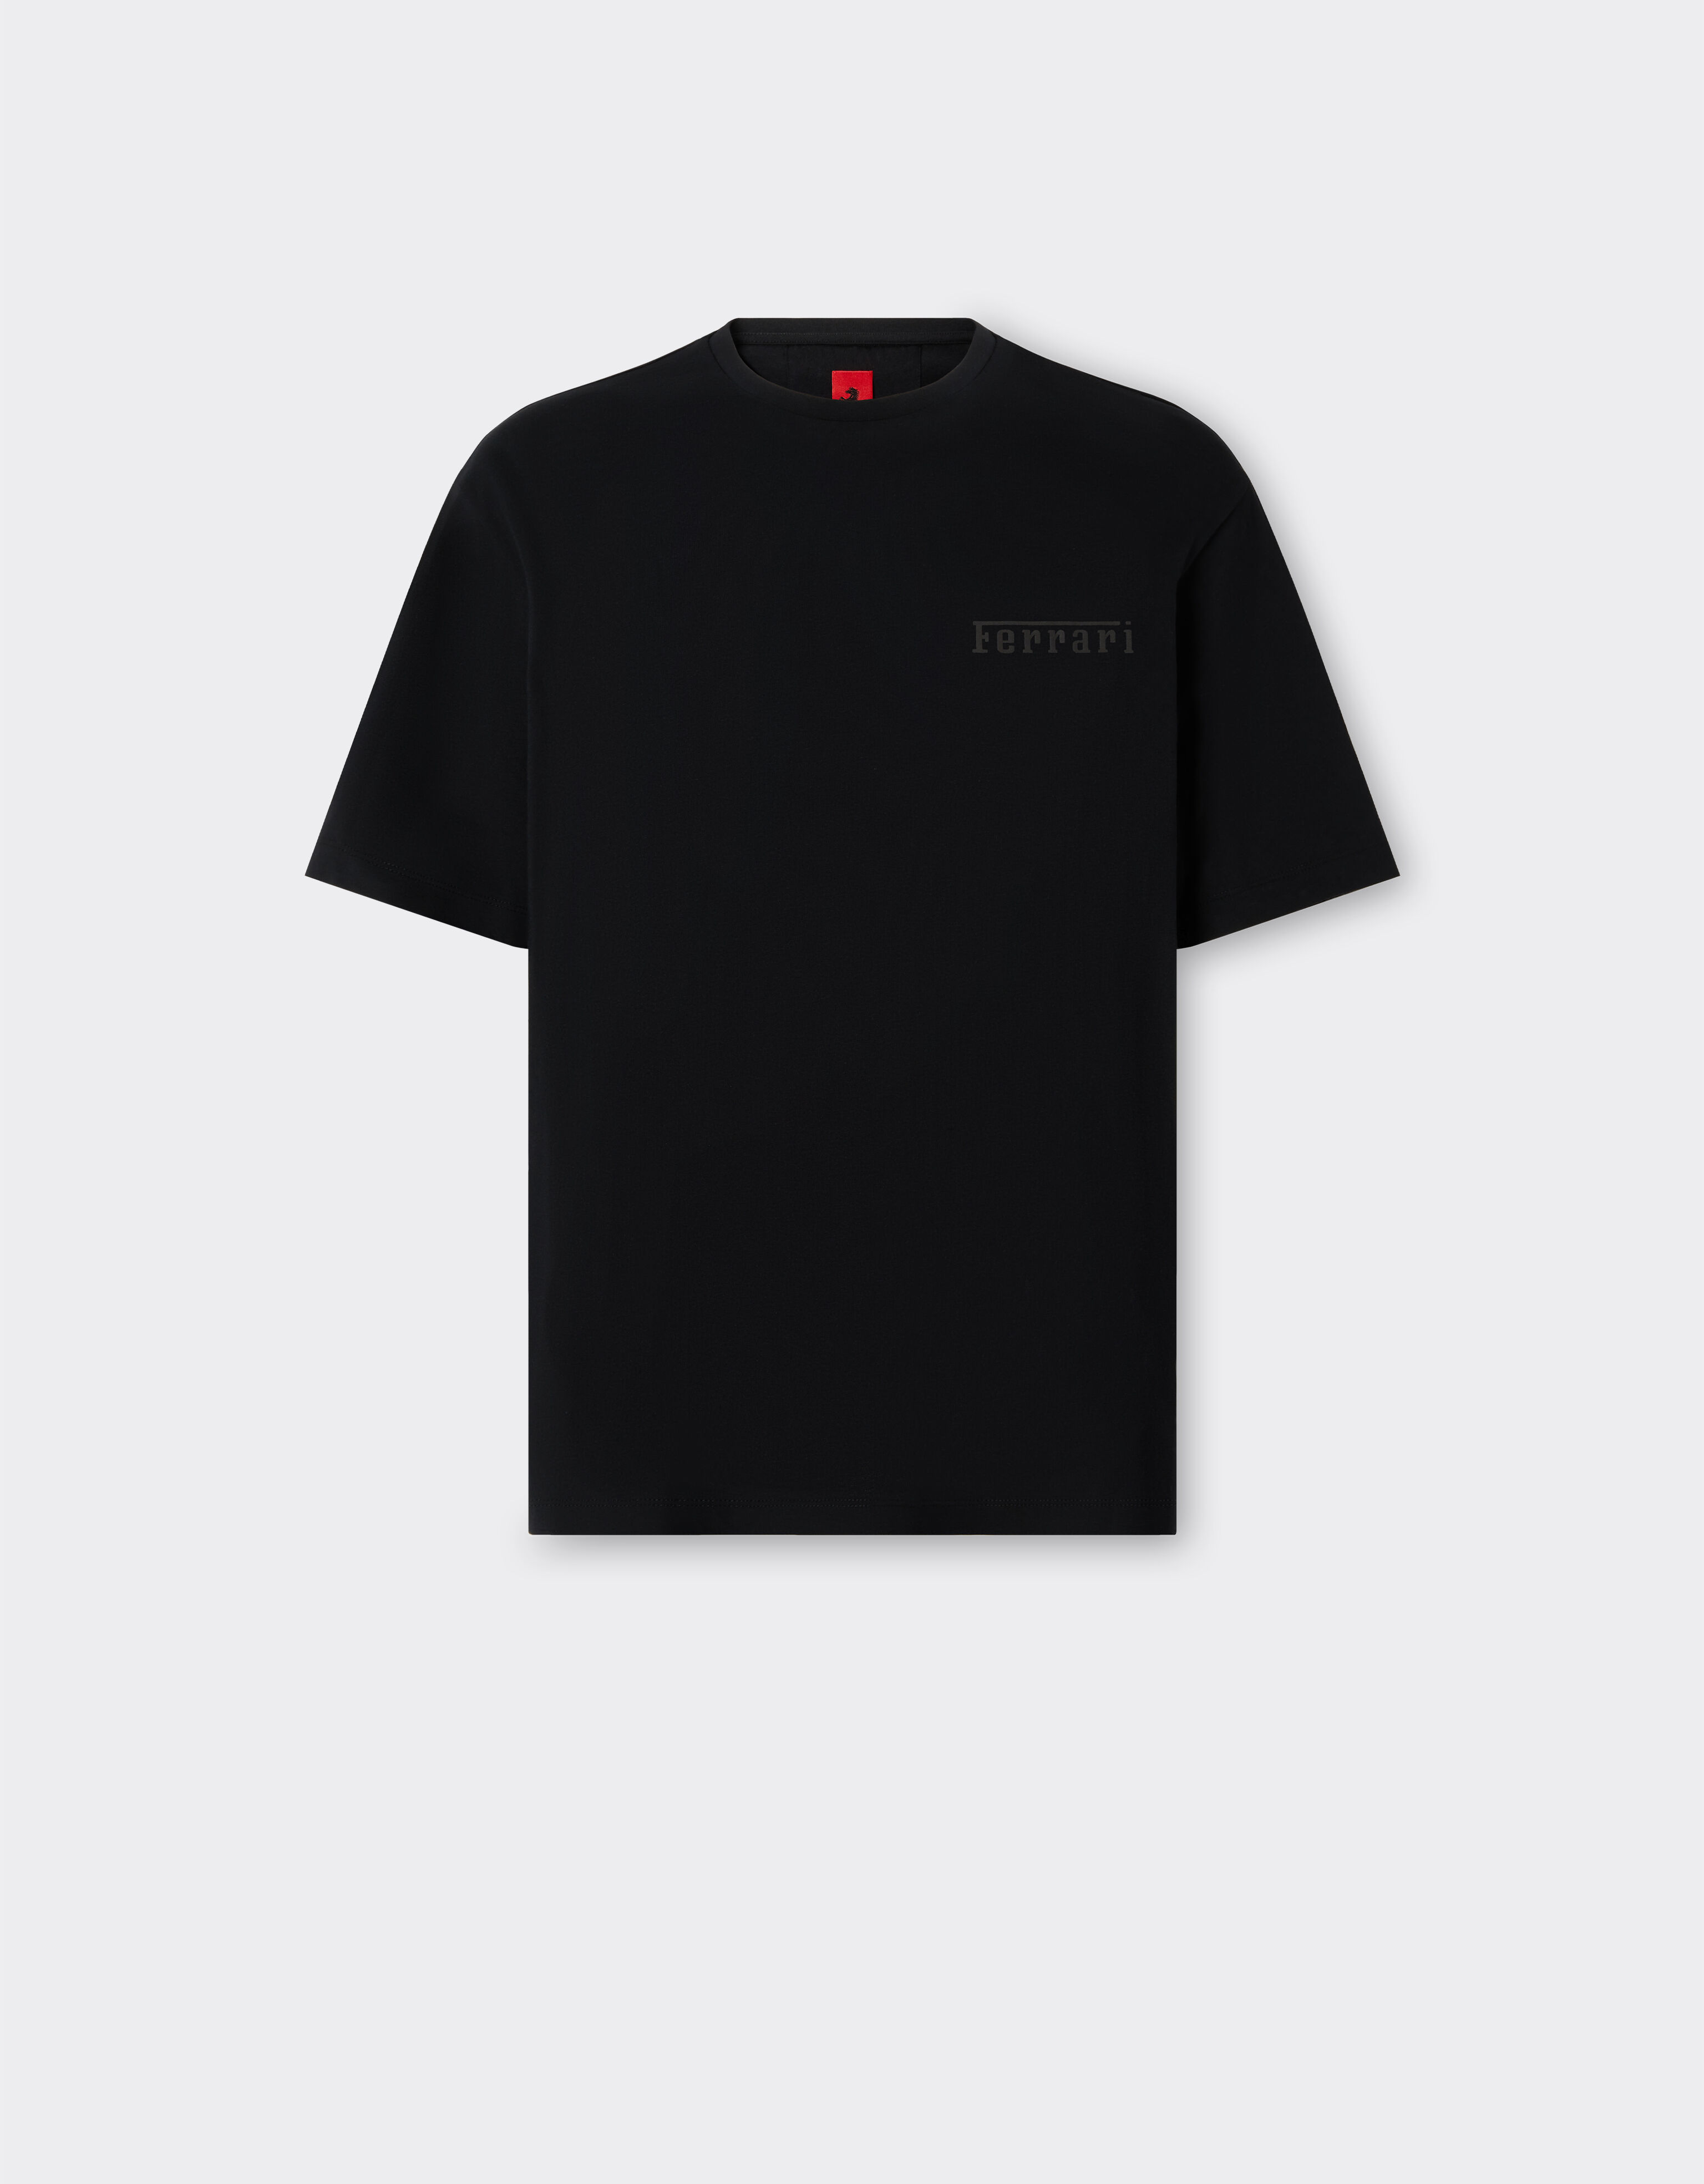 Ferrari Cotton T-shirt with Ferrari logo Navy 48489f